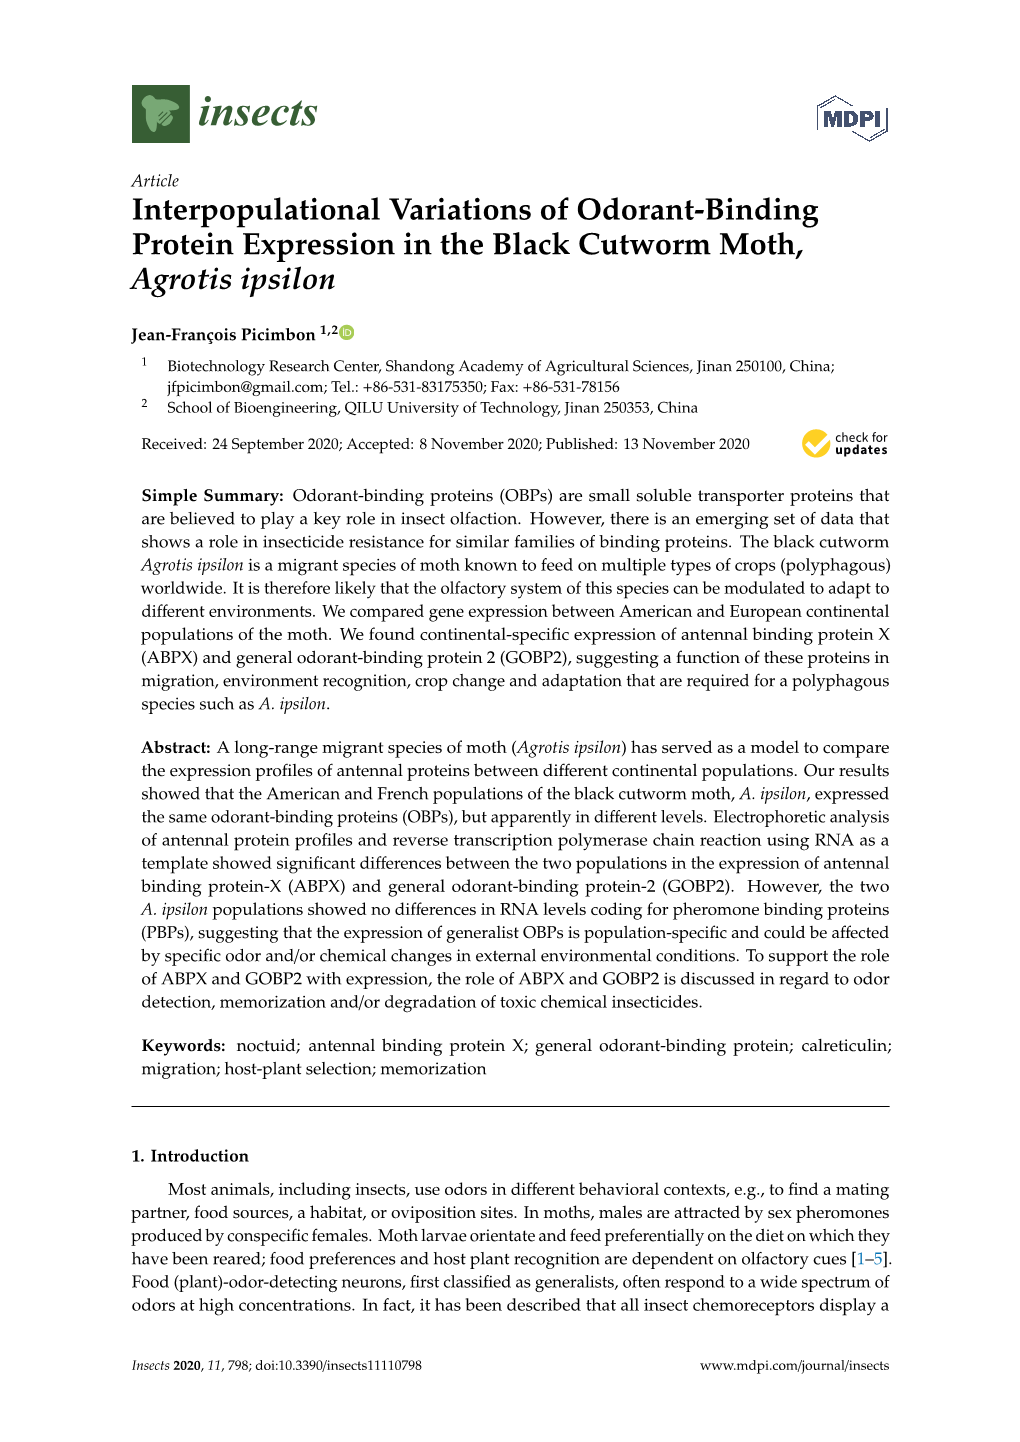 Interpopulational Variations of Odorant-Binding Protein Expression in the Black Cutworm Moth, Agrotis Ipsilon